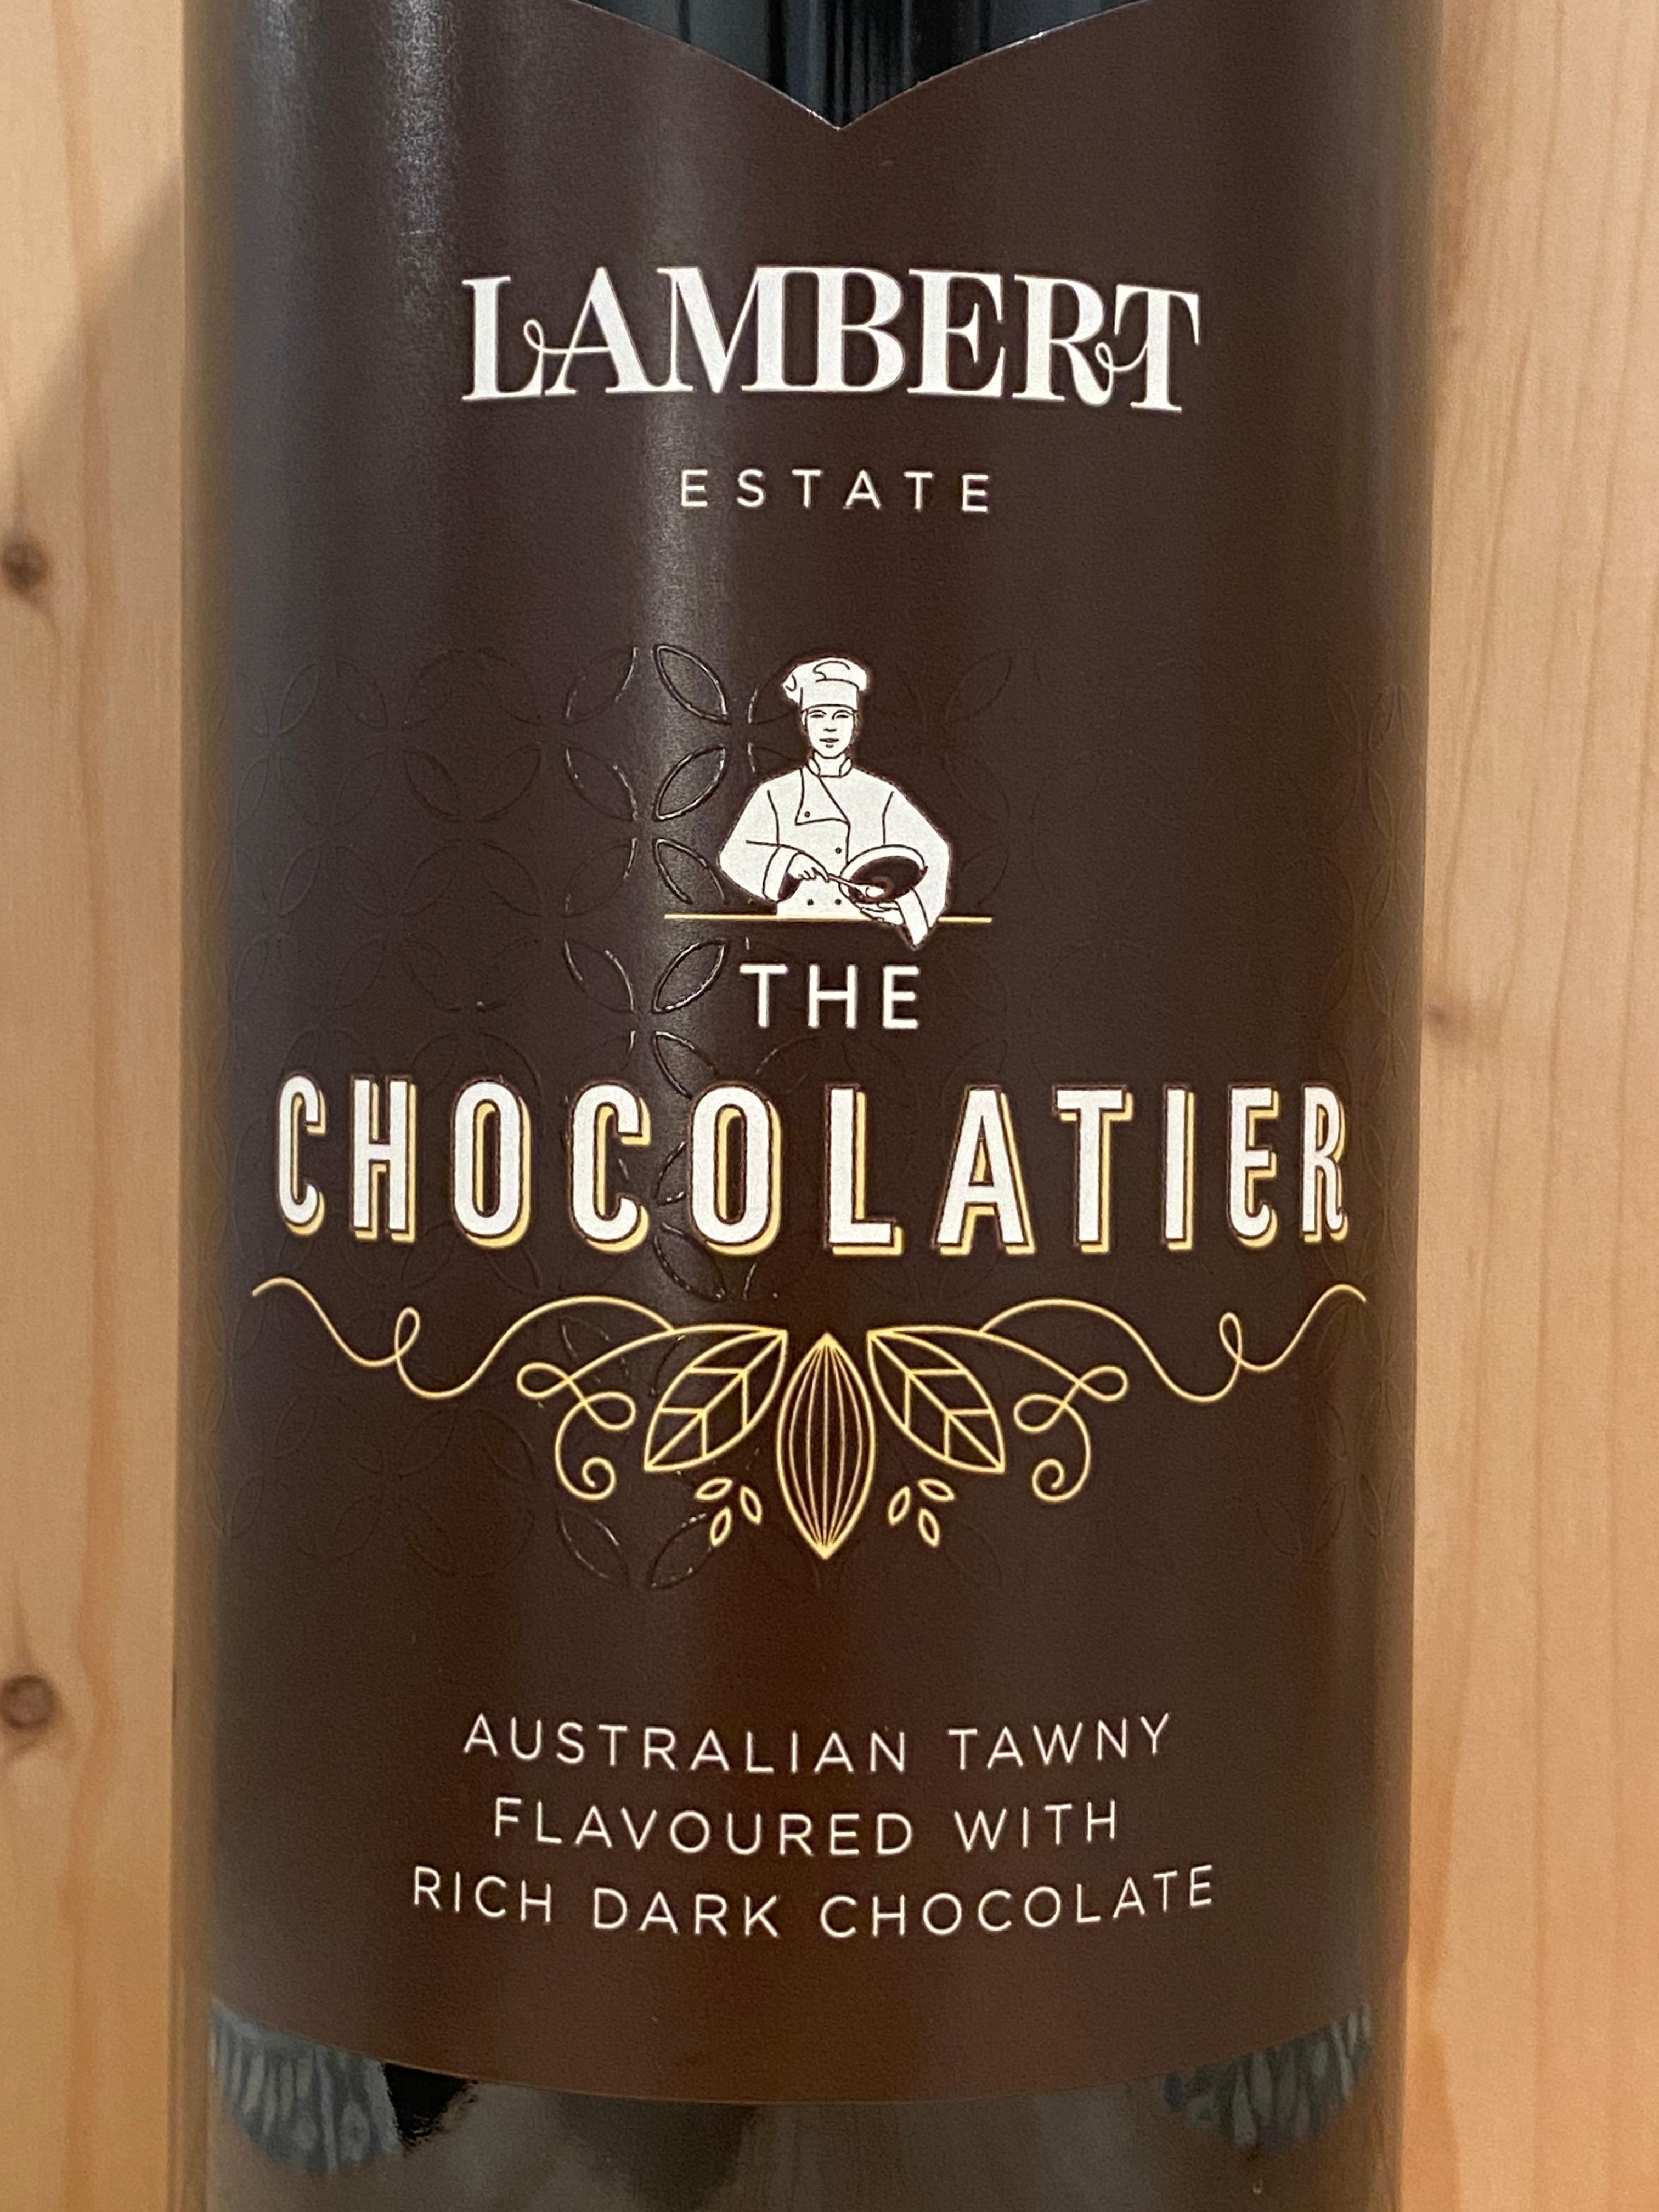 Lambert Estate "The Chocolatier" Tawny NV: South Australia